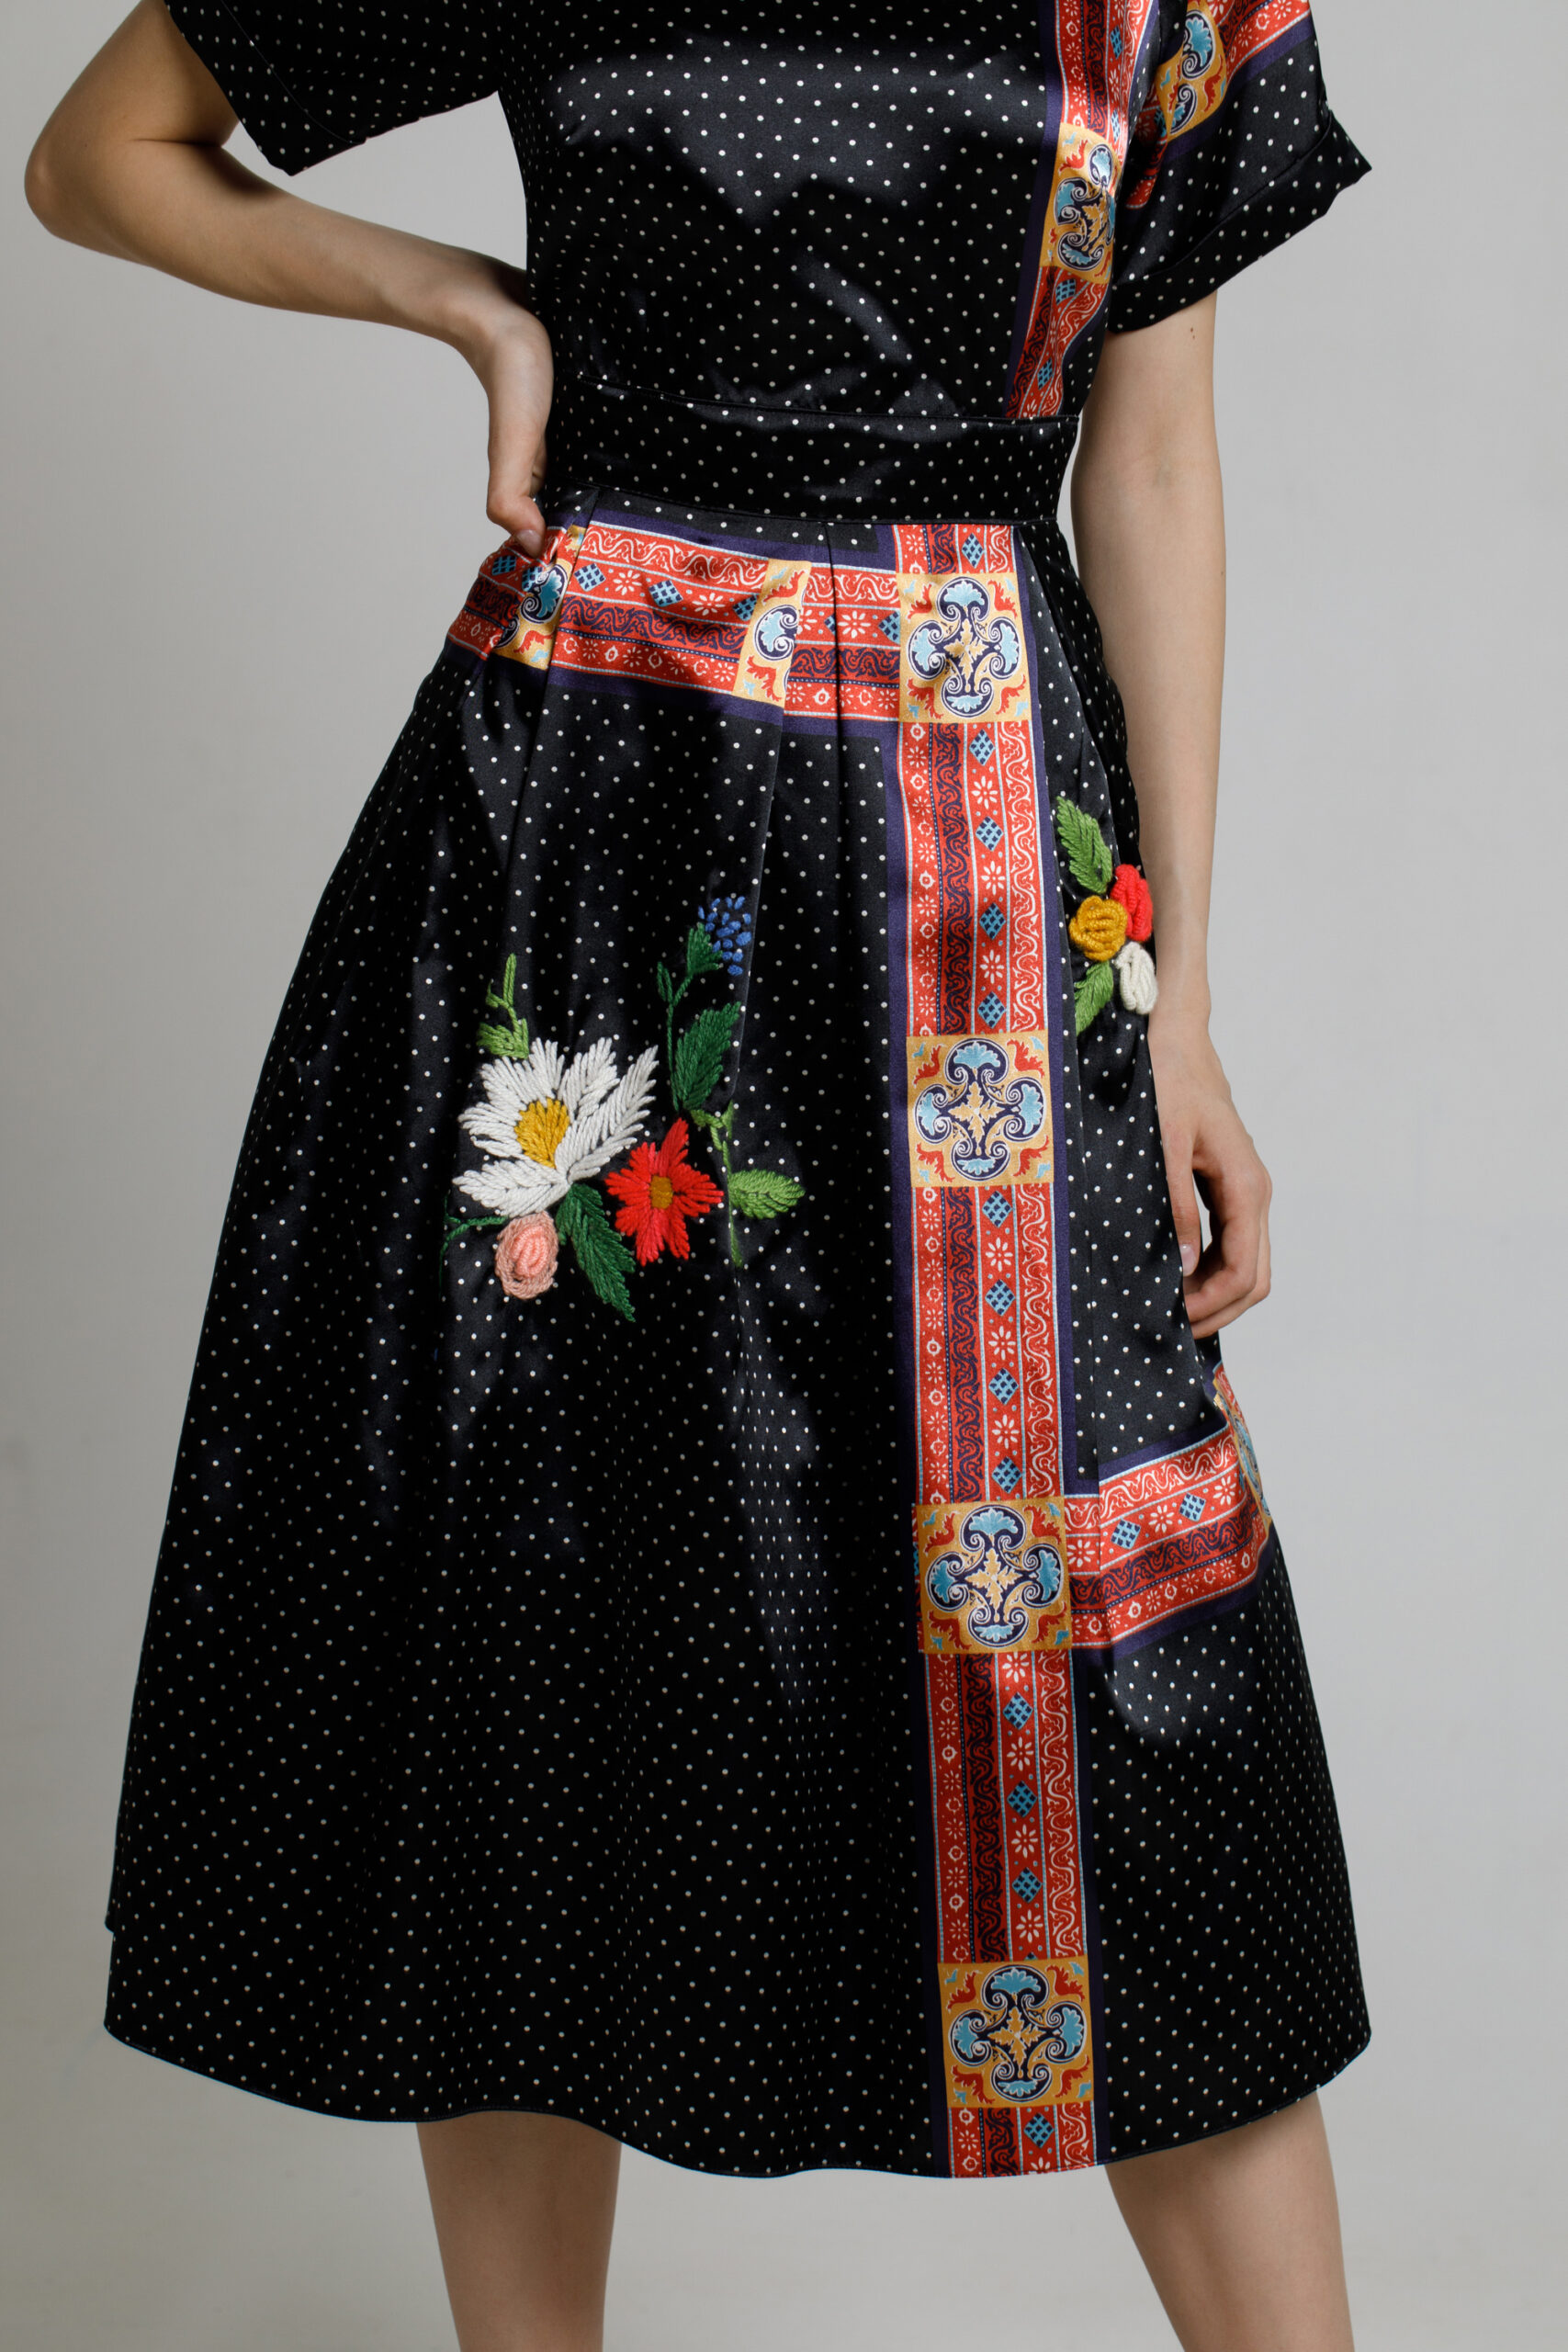 DONATELLA elegant black satin dress. Natural fabrics, original design, handmade embroidery